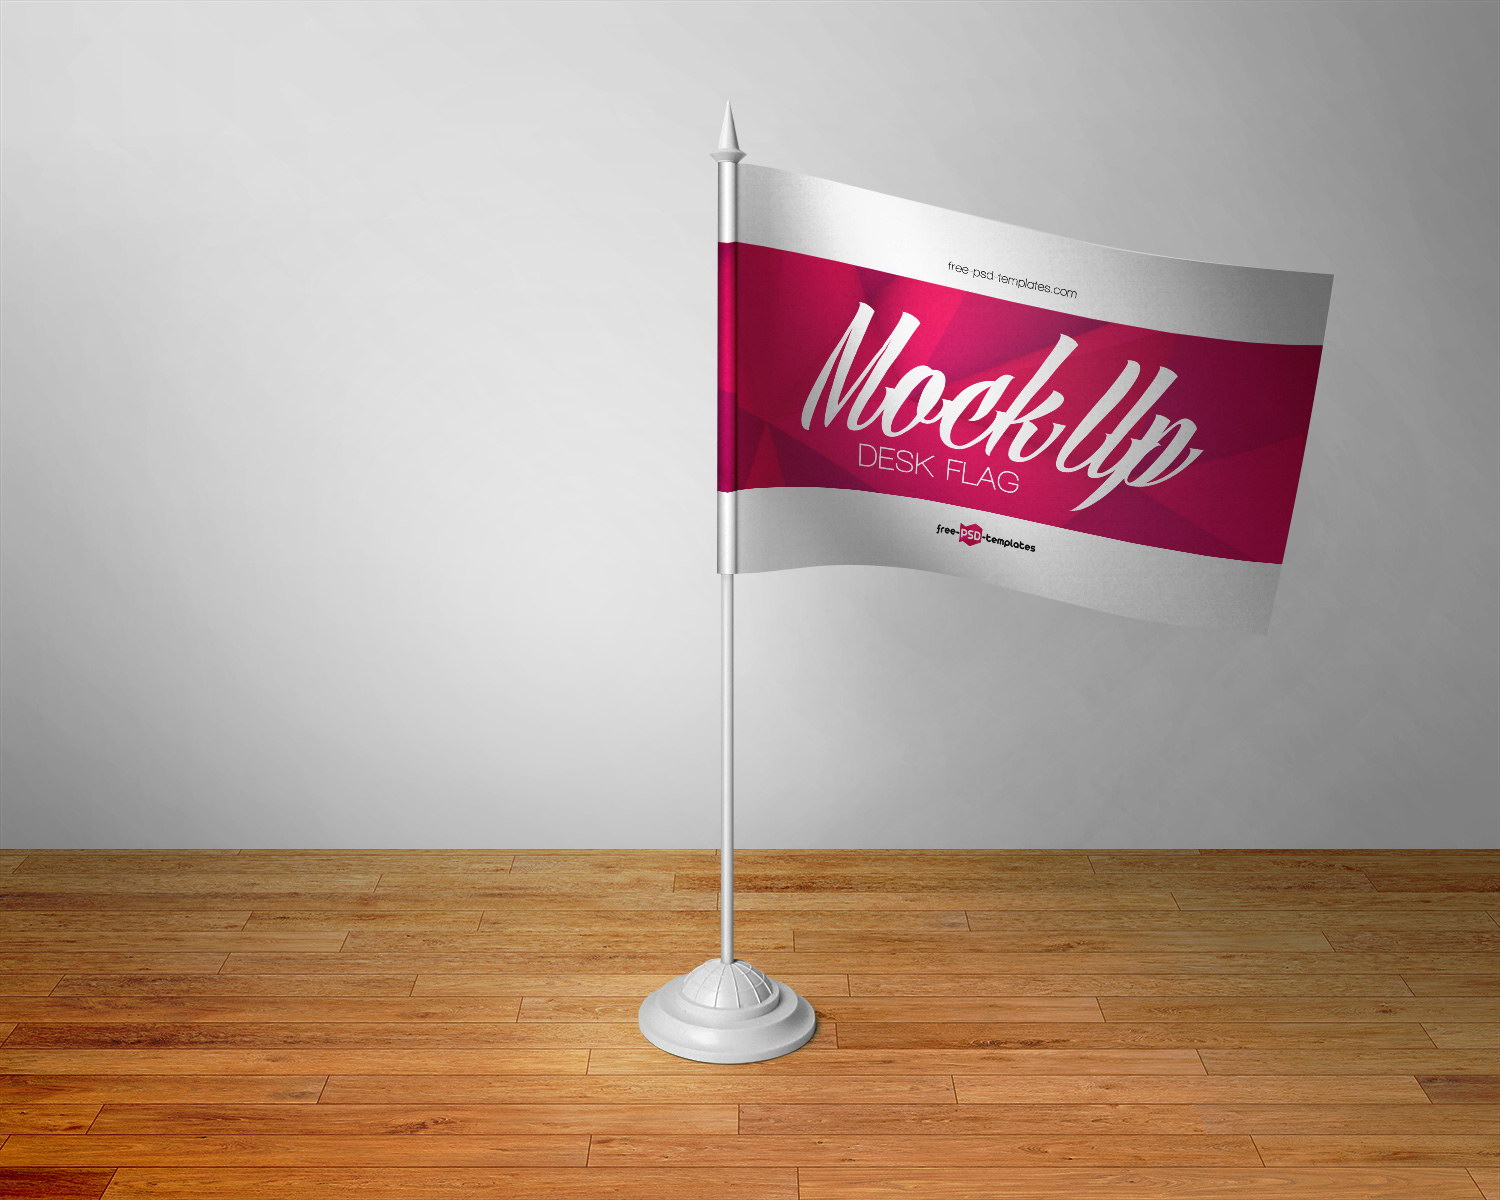 Download Flags Mockups Free Mockup